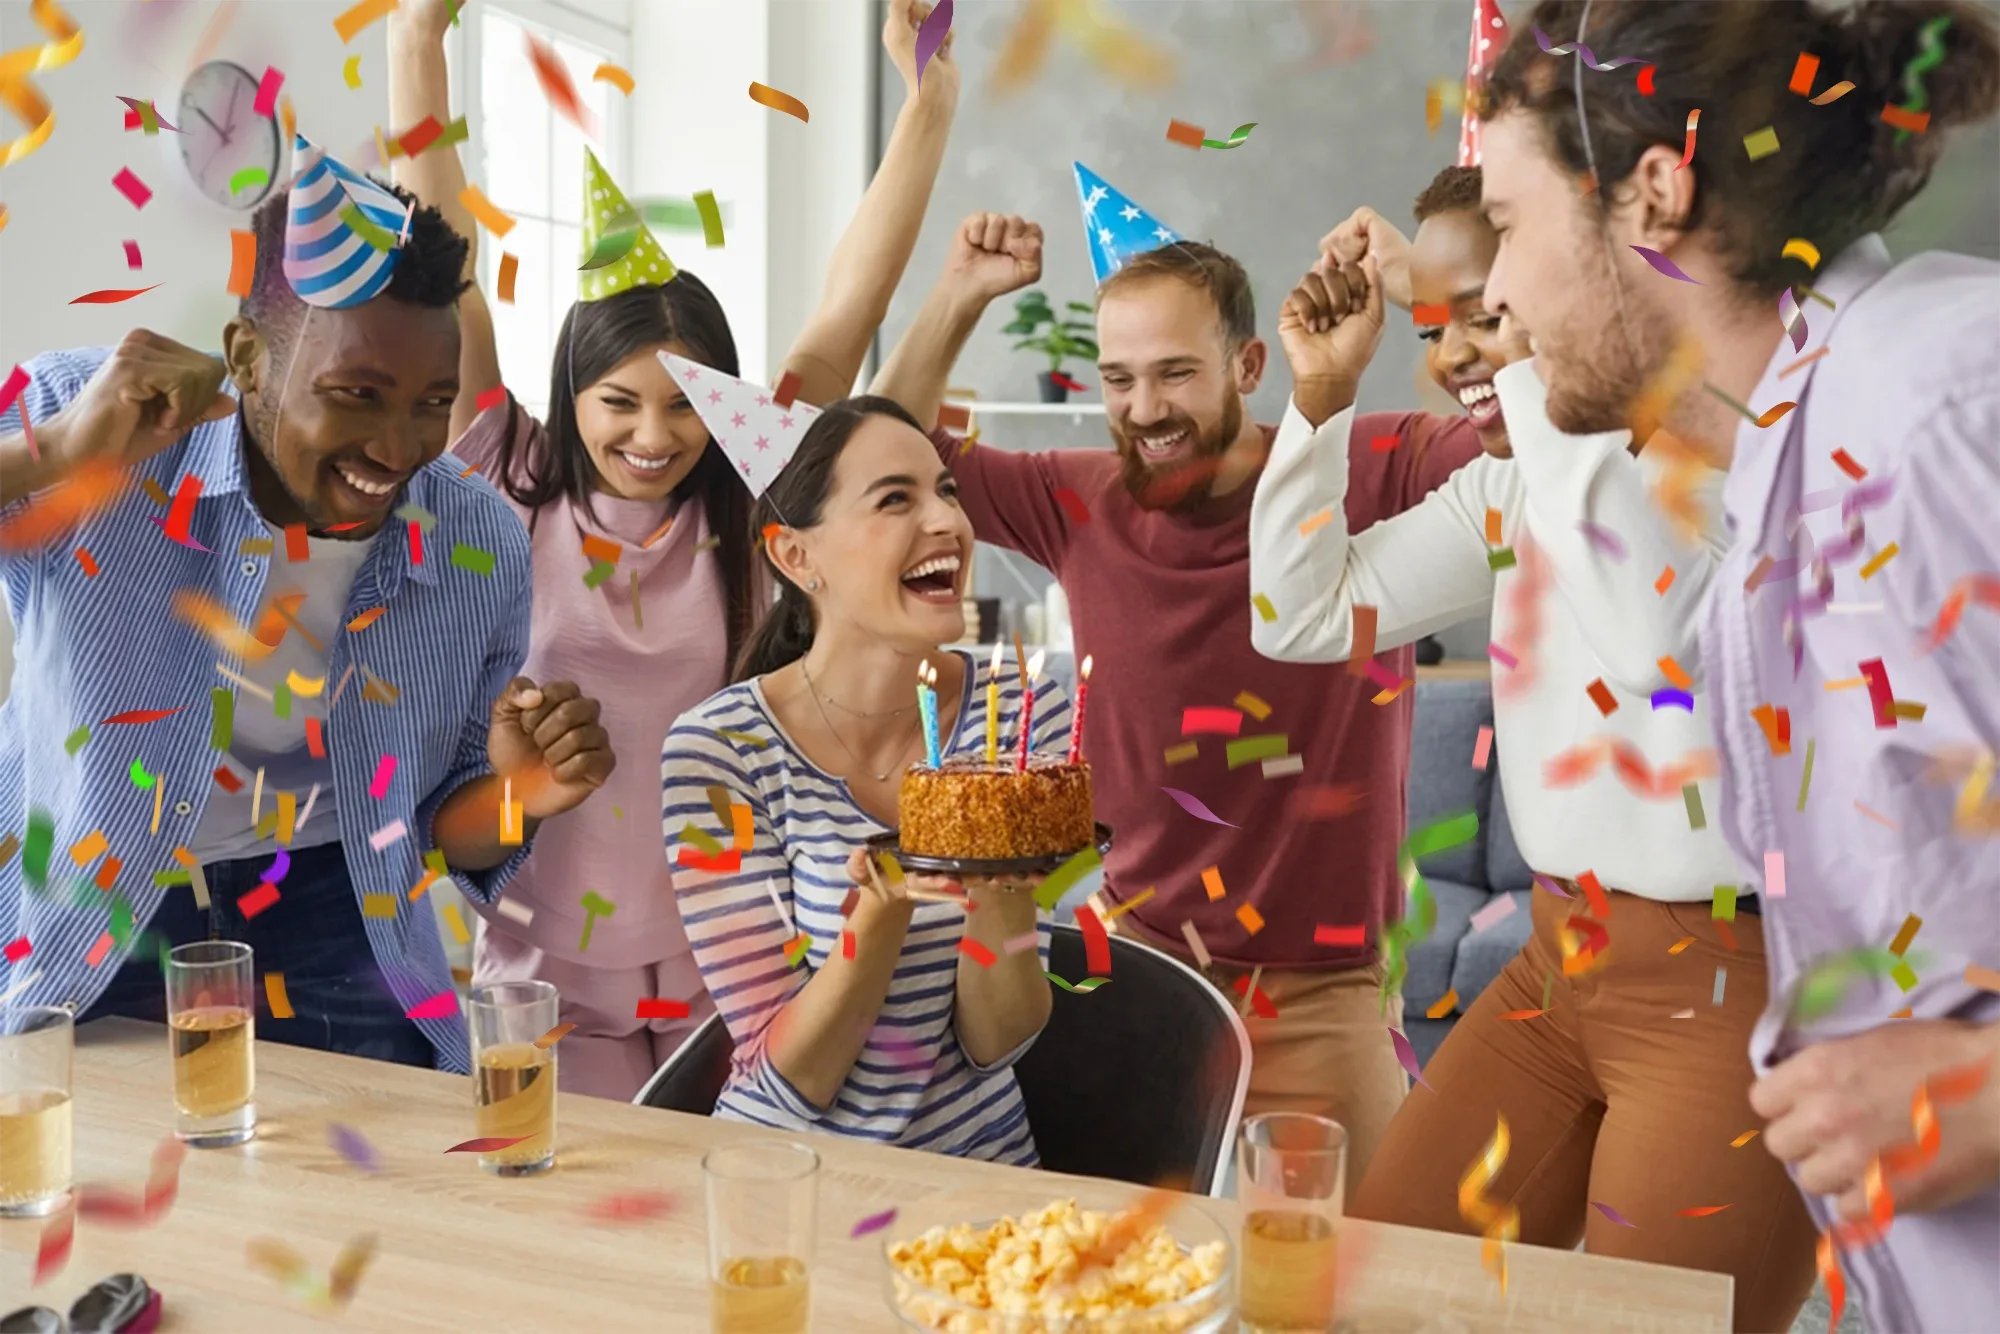 100 Confetti Photo Overlays, Realistic Falling, Birthday, Magic Party Celebration